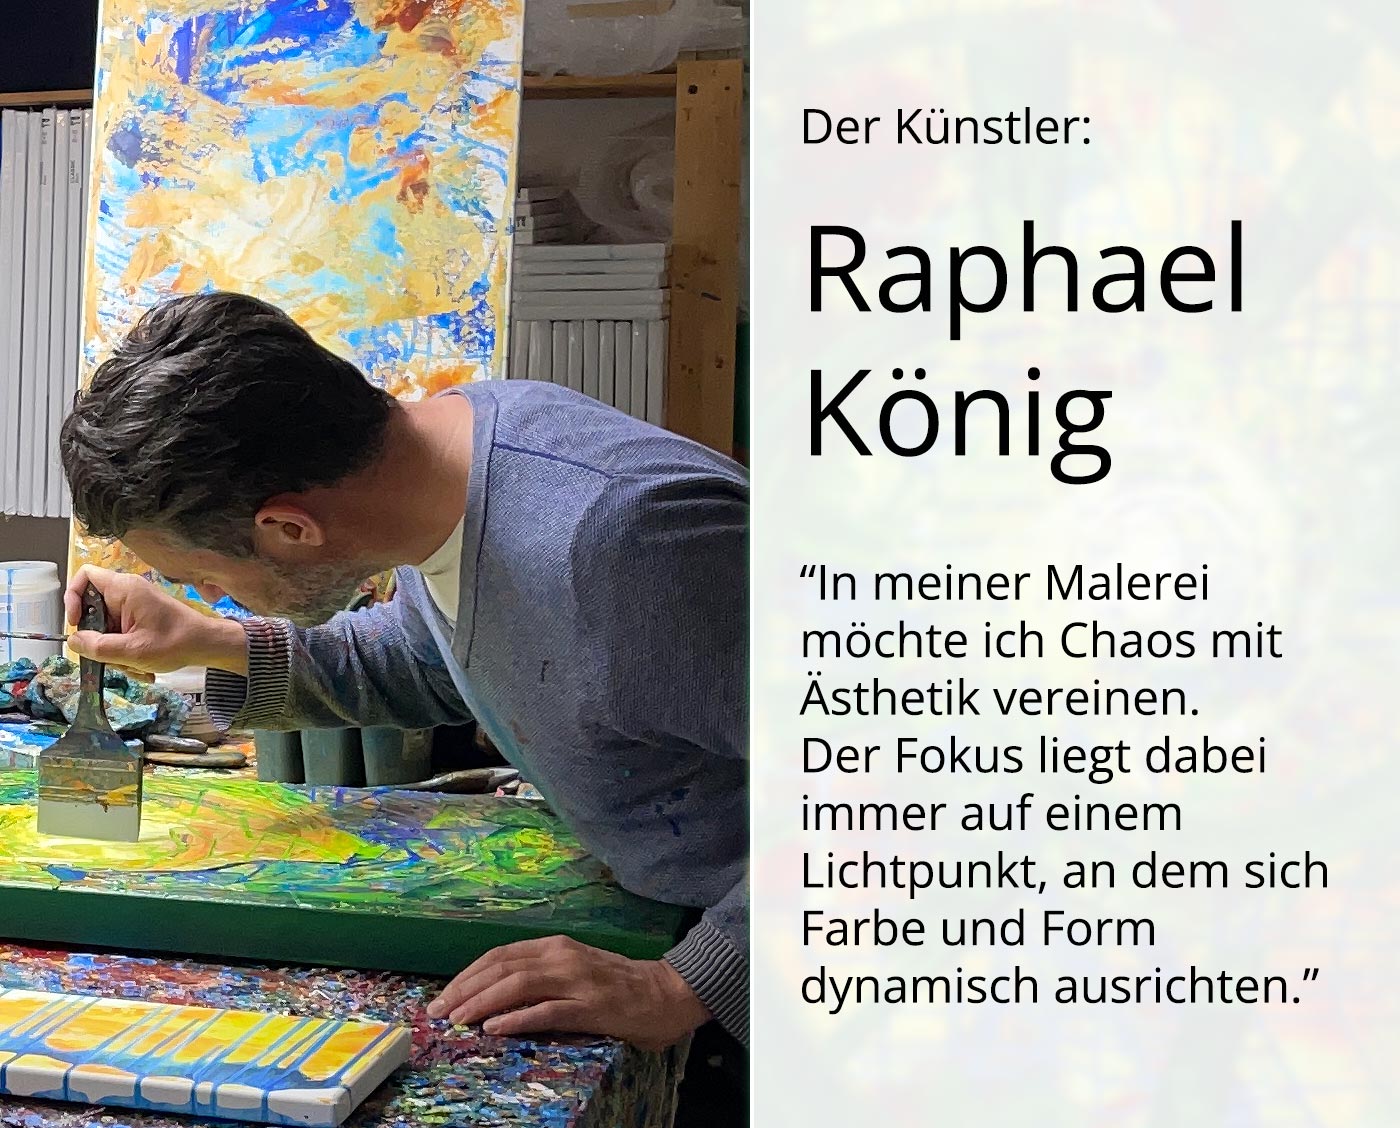 Acrylbild, R.König: "Sonnensegel", Unikat/Original